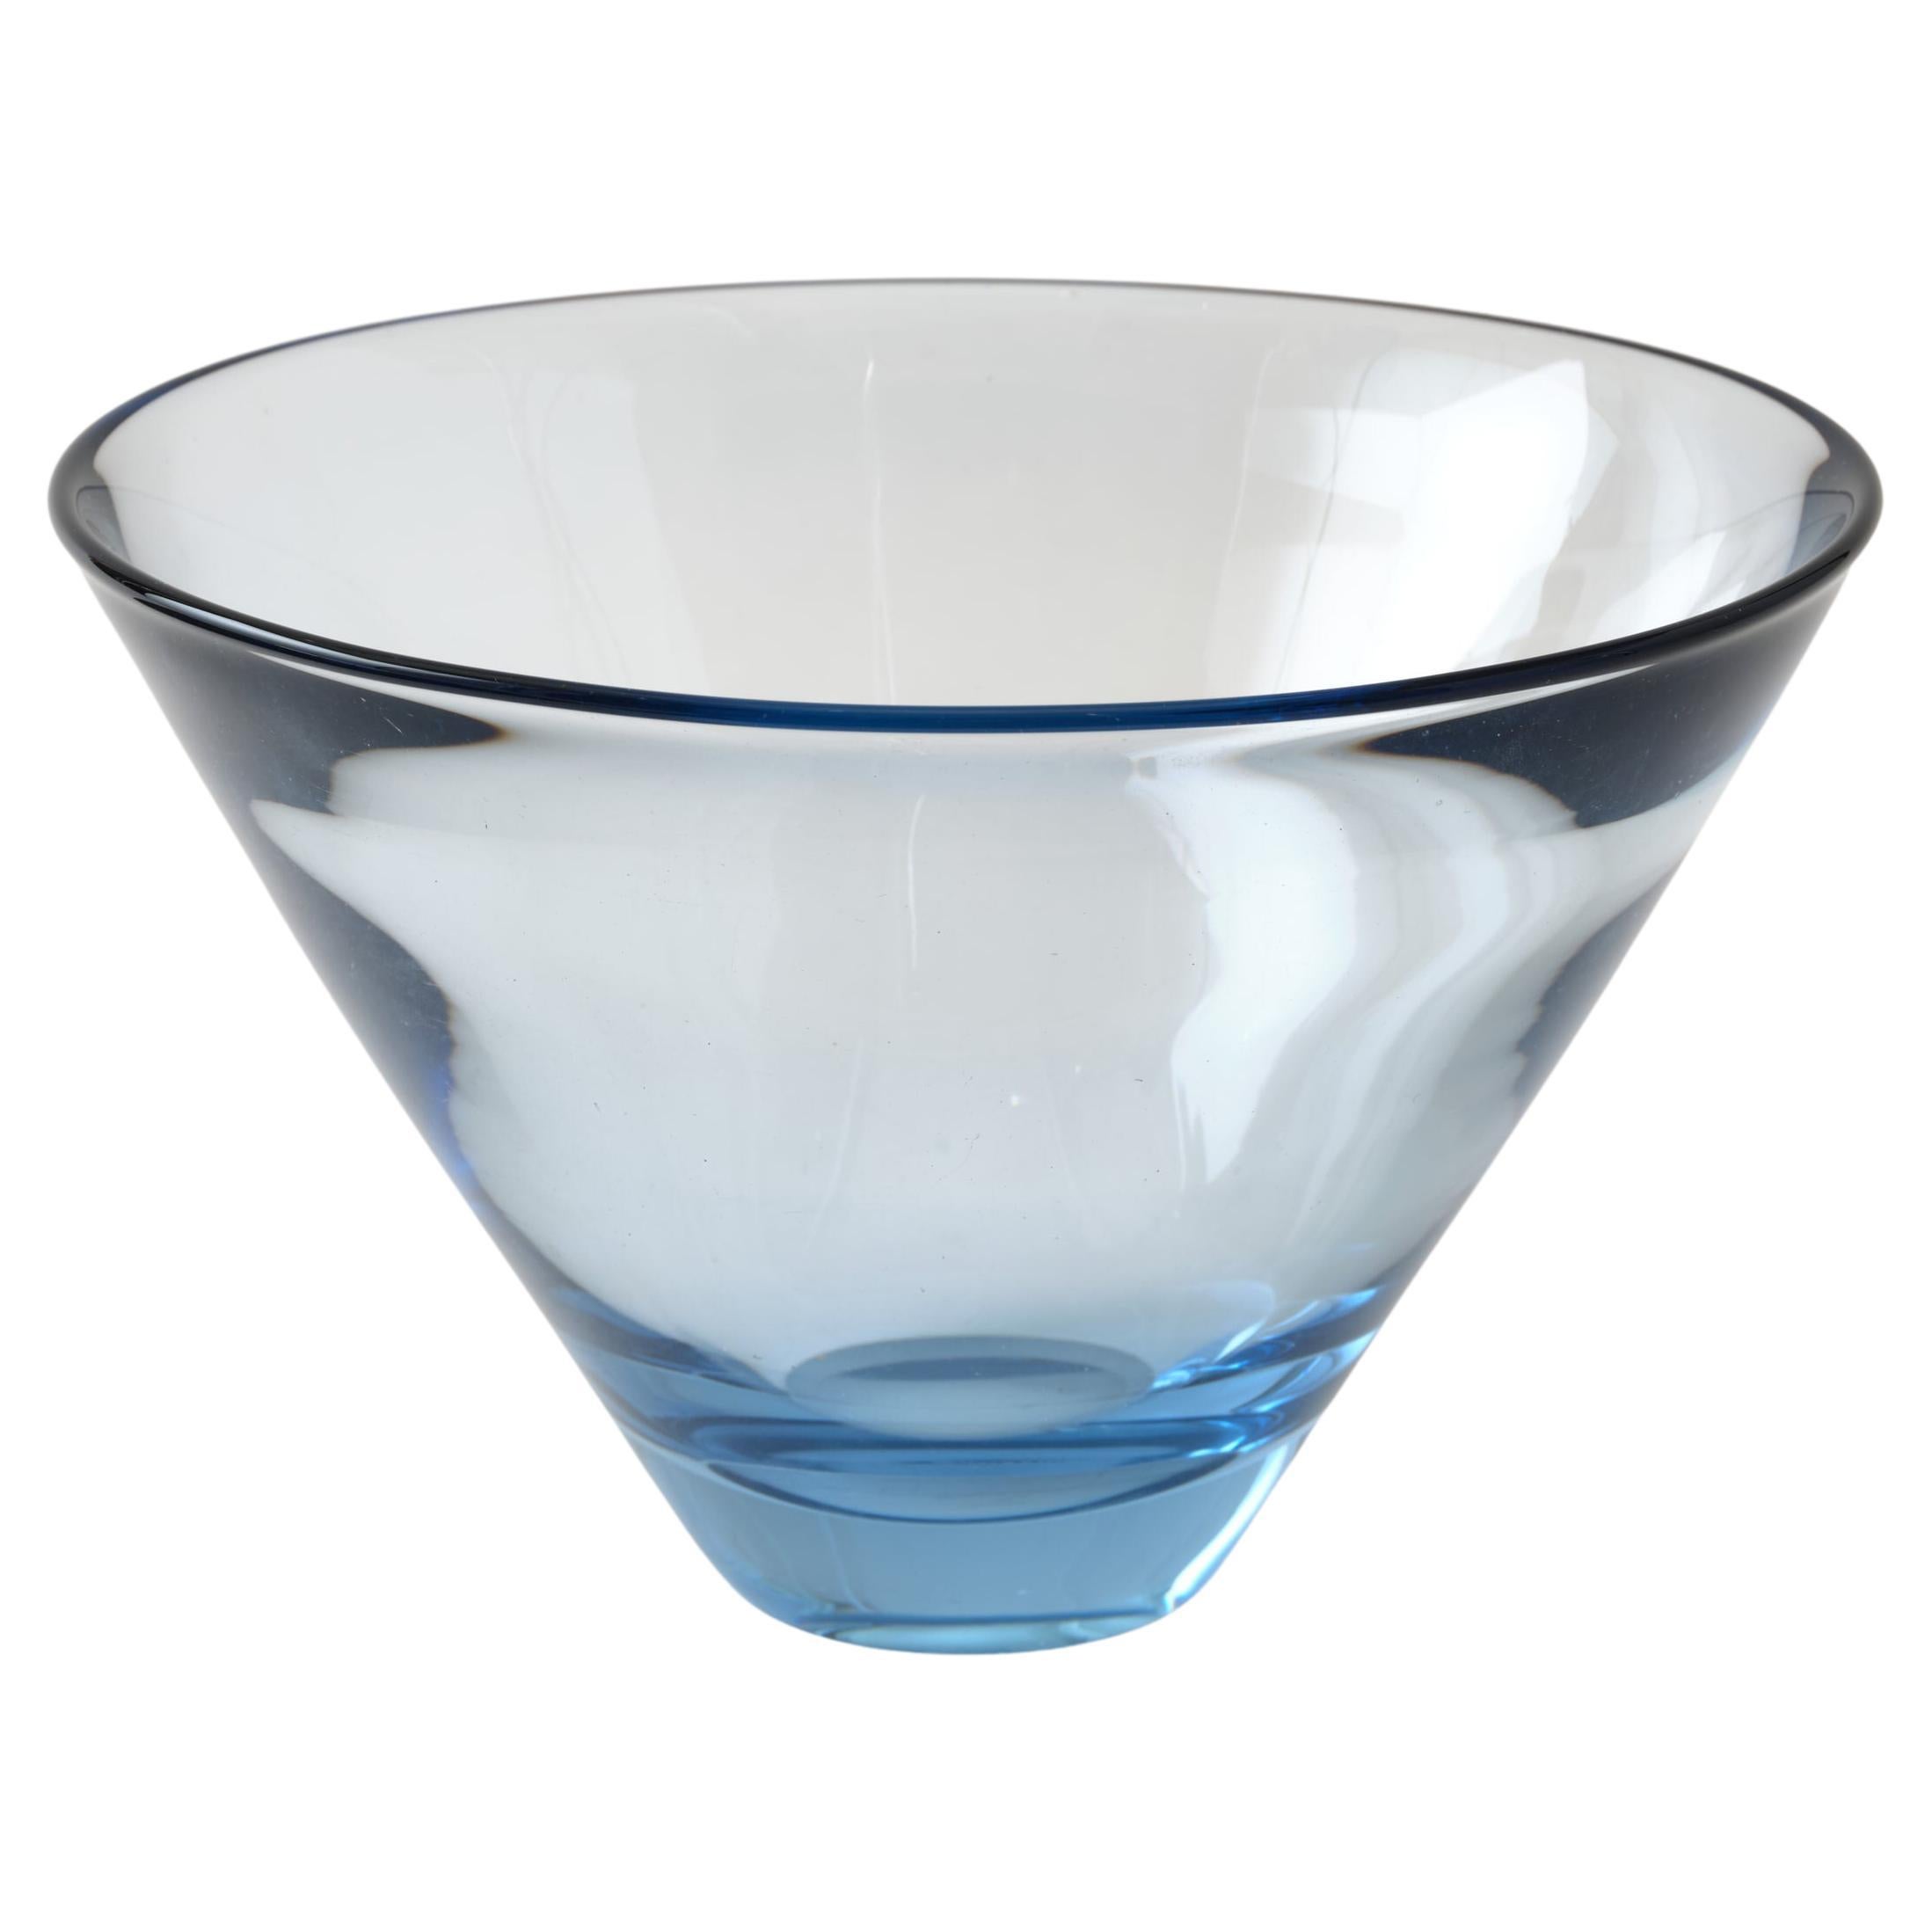 Glass Bowl by Holmegaard, Denmark, Light Blue Color, Heavy Round Shape, C 1960